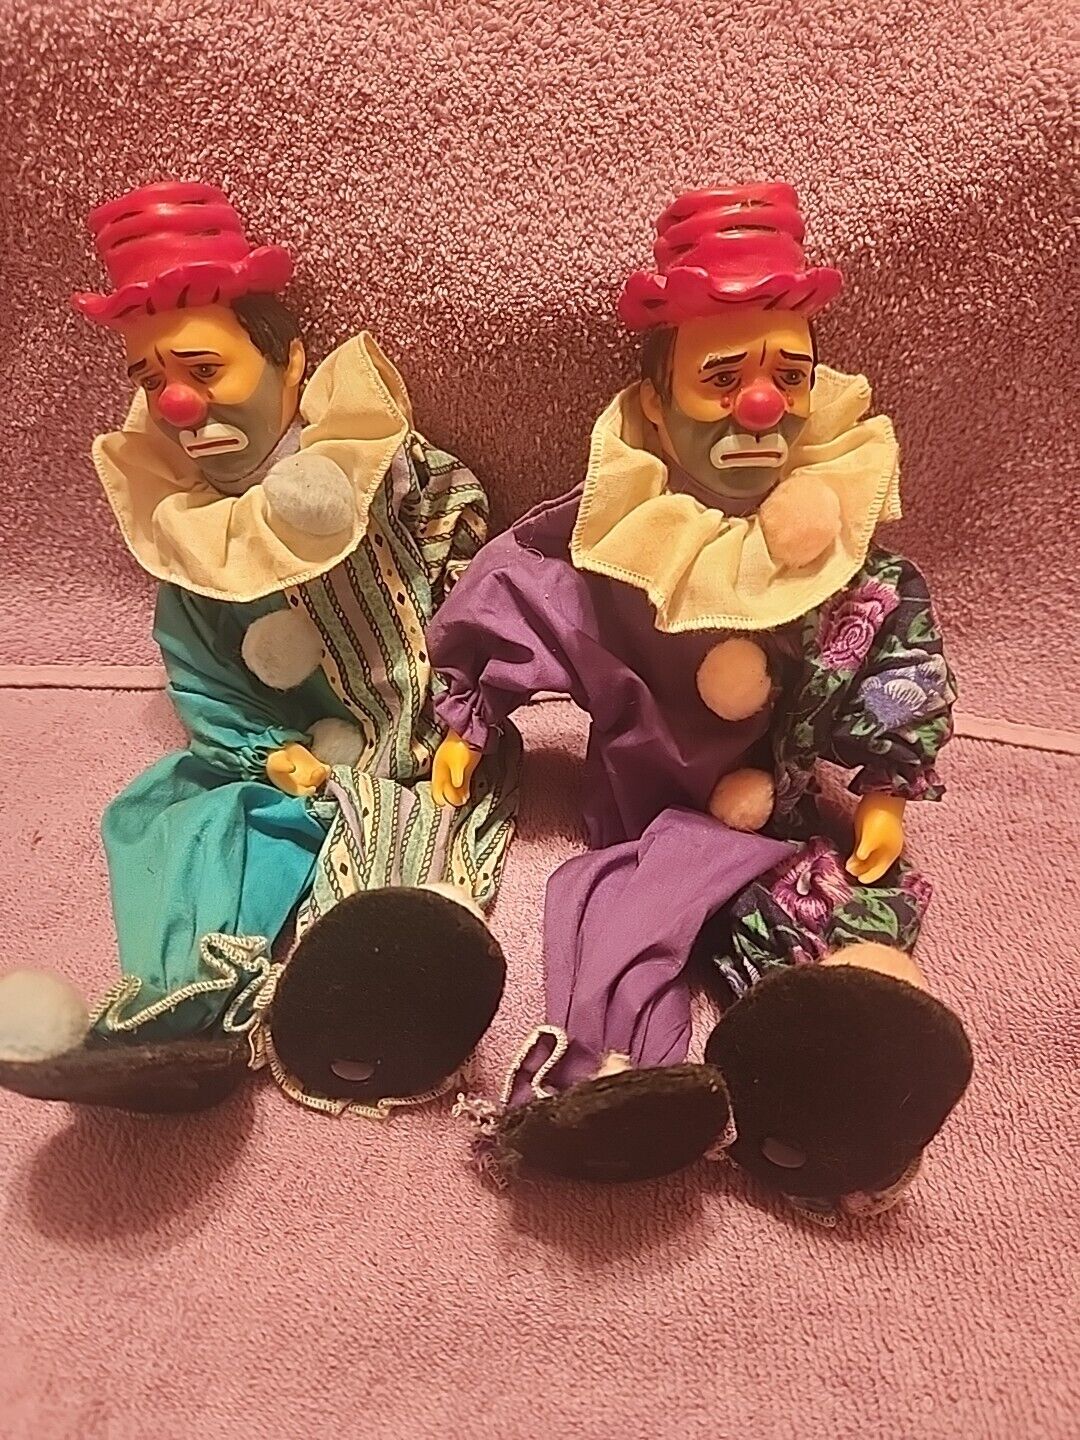 Vintage 1980s Homemade Emmitt Kelly Sad Hobo Clowns With Handmade Clothes